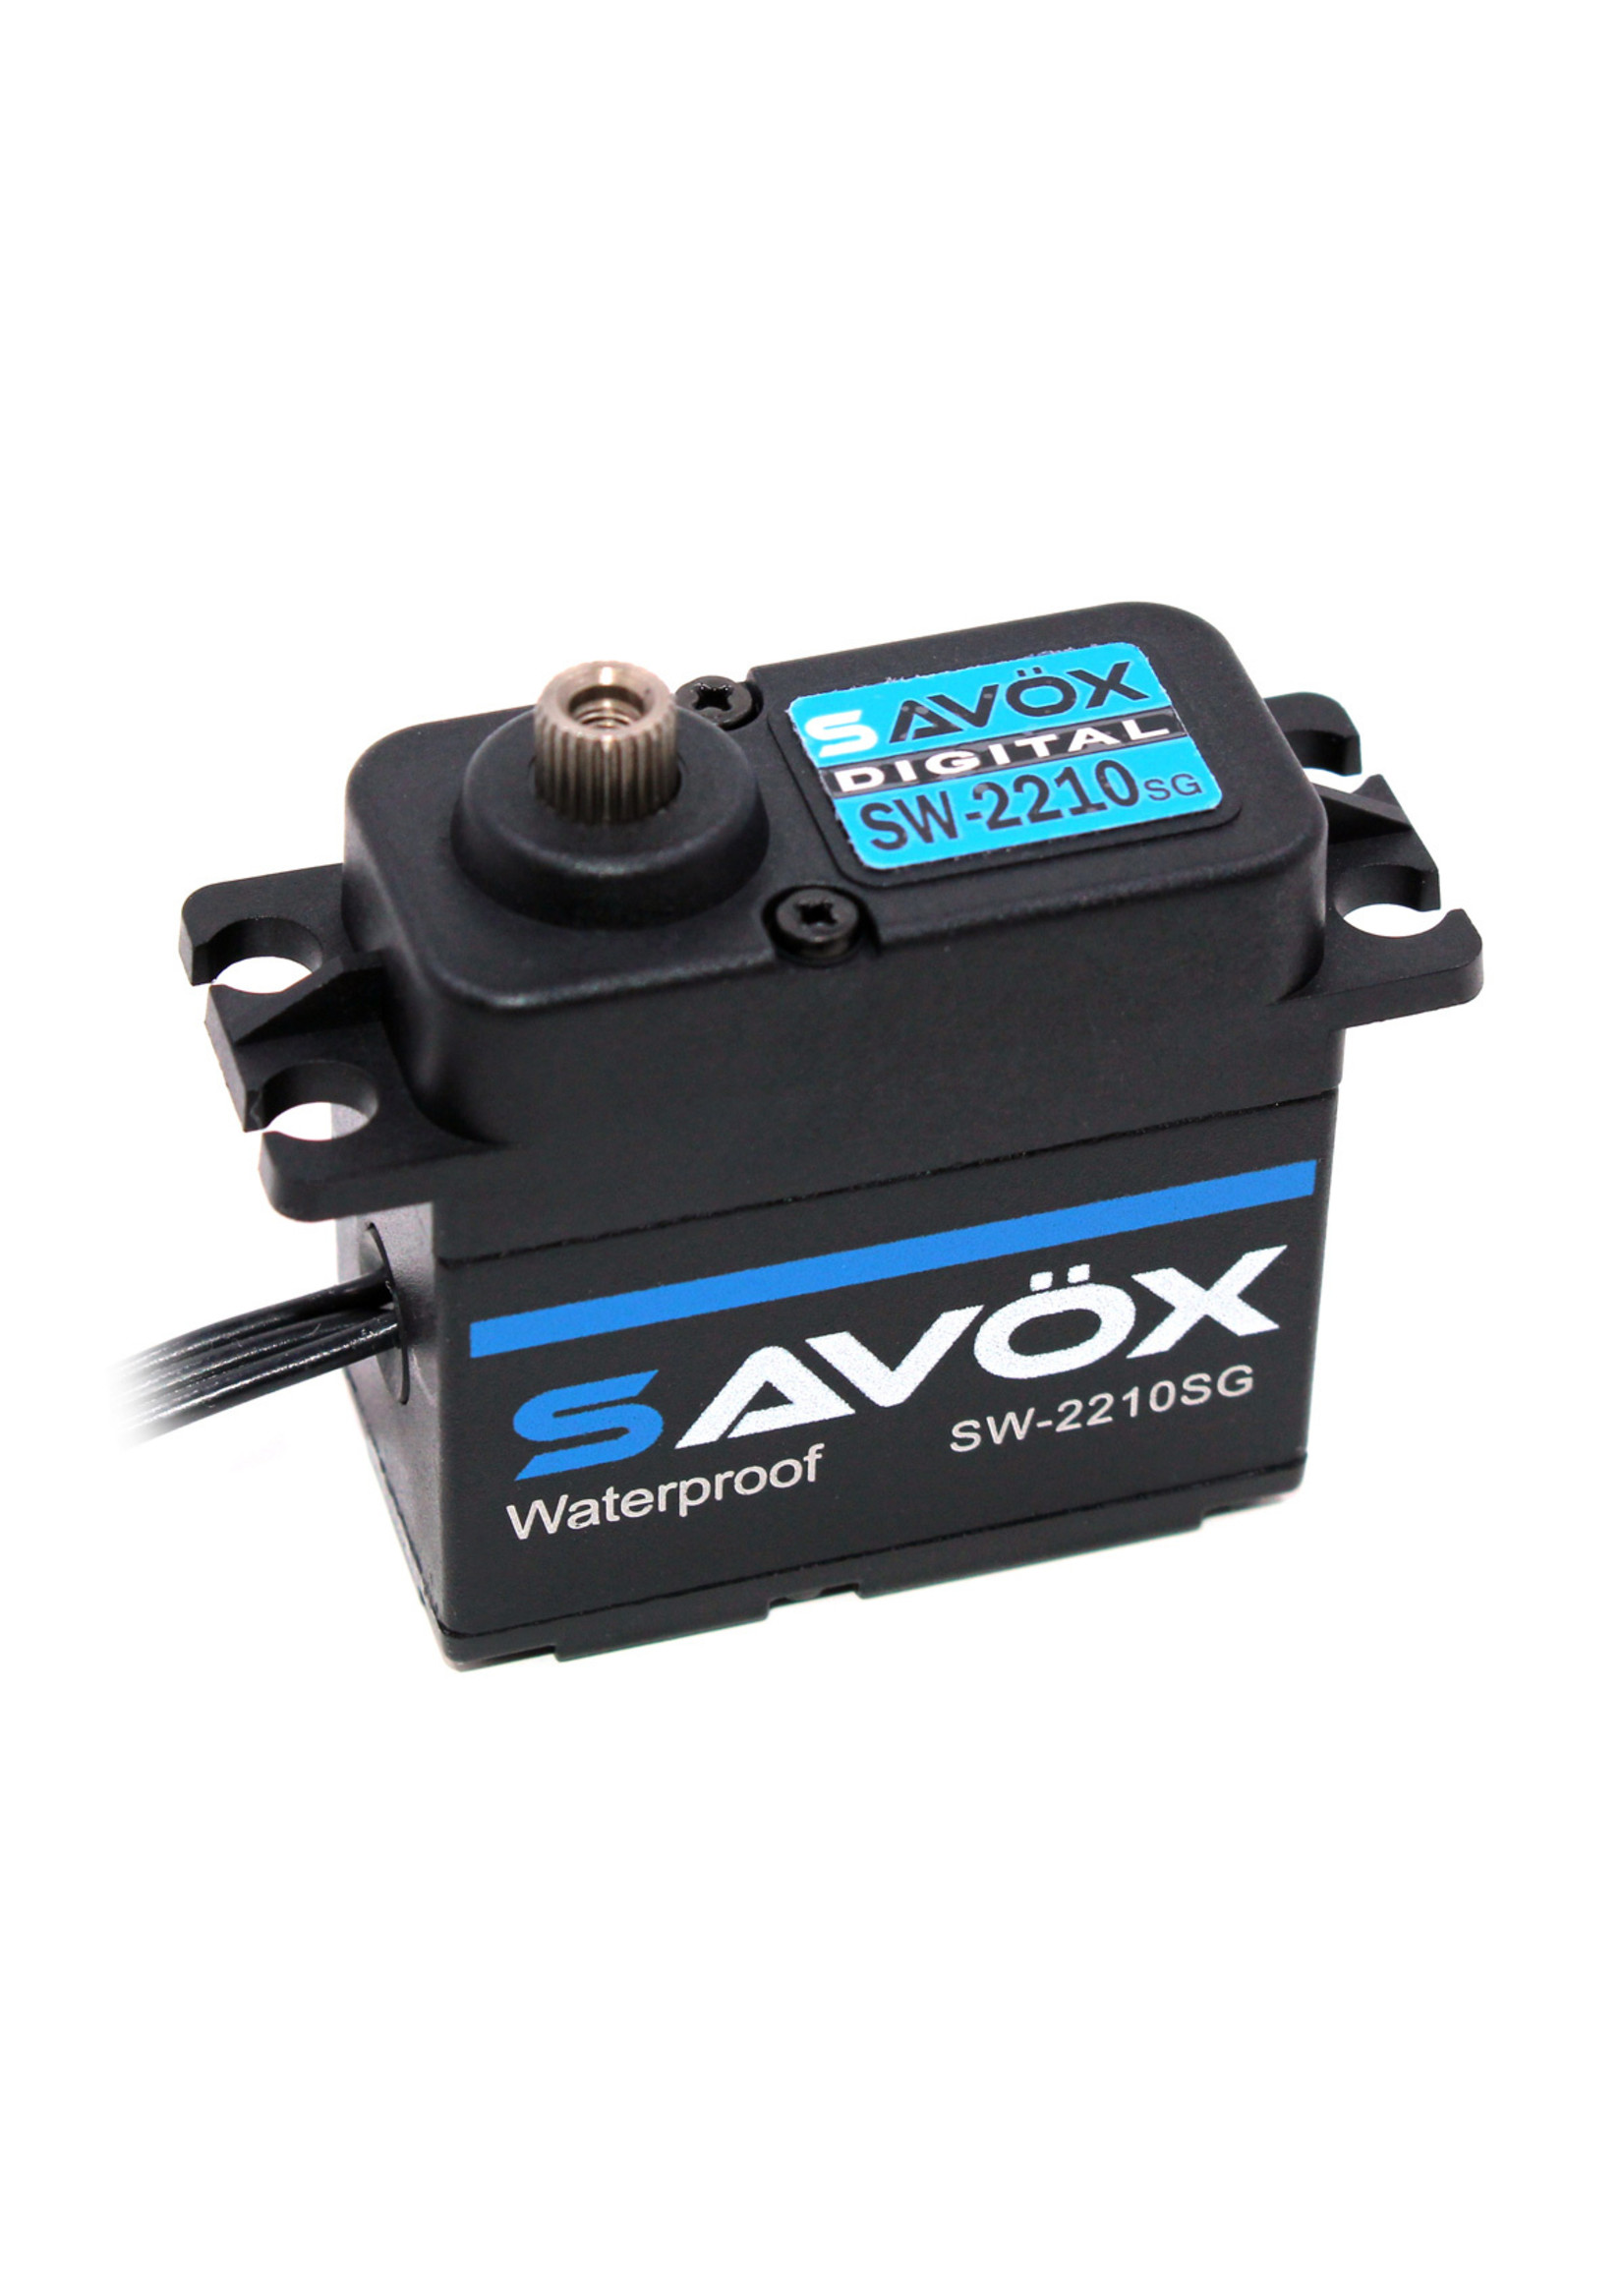 Savox SAVSW2210SGBE - Black Edition Waterproof Brushless Digital Servo